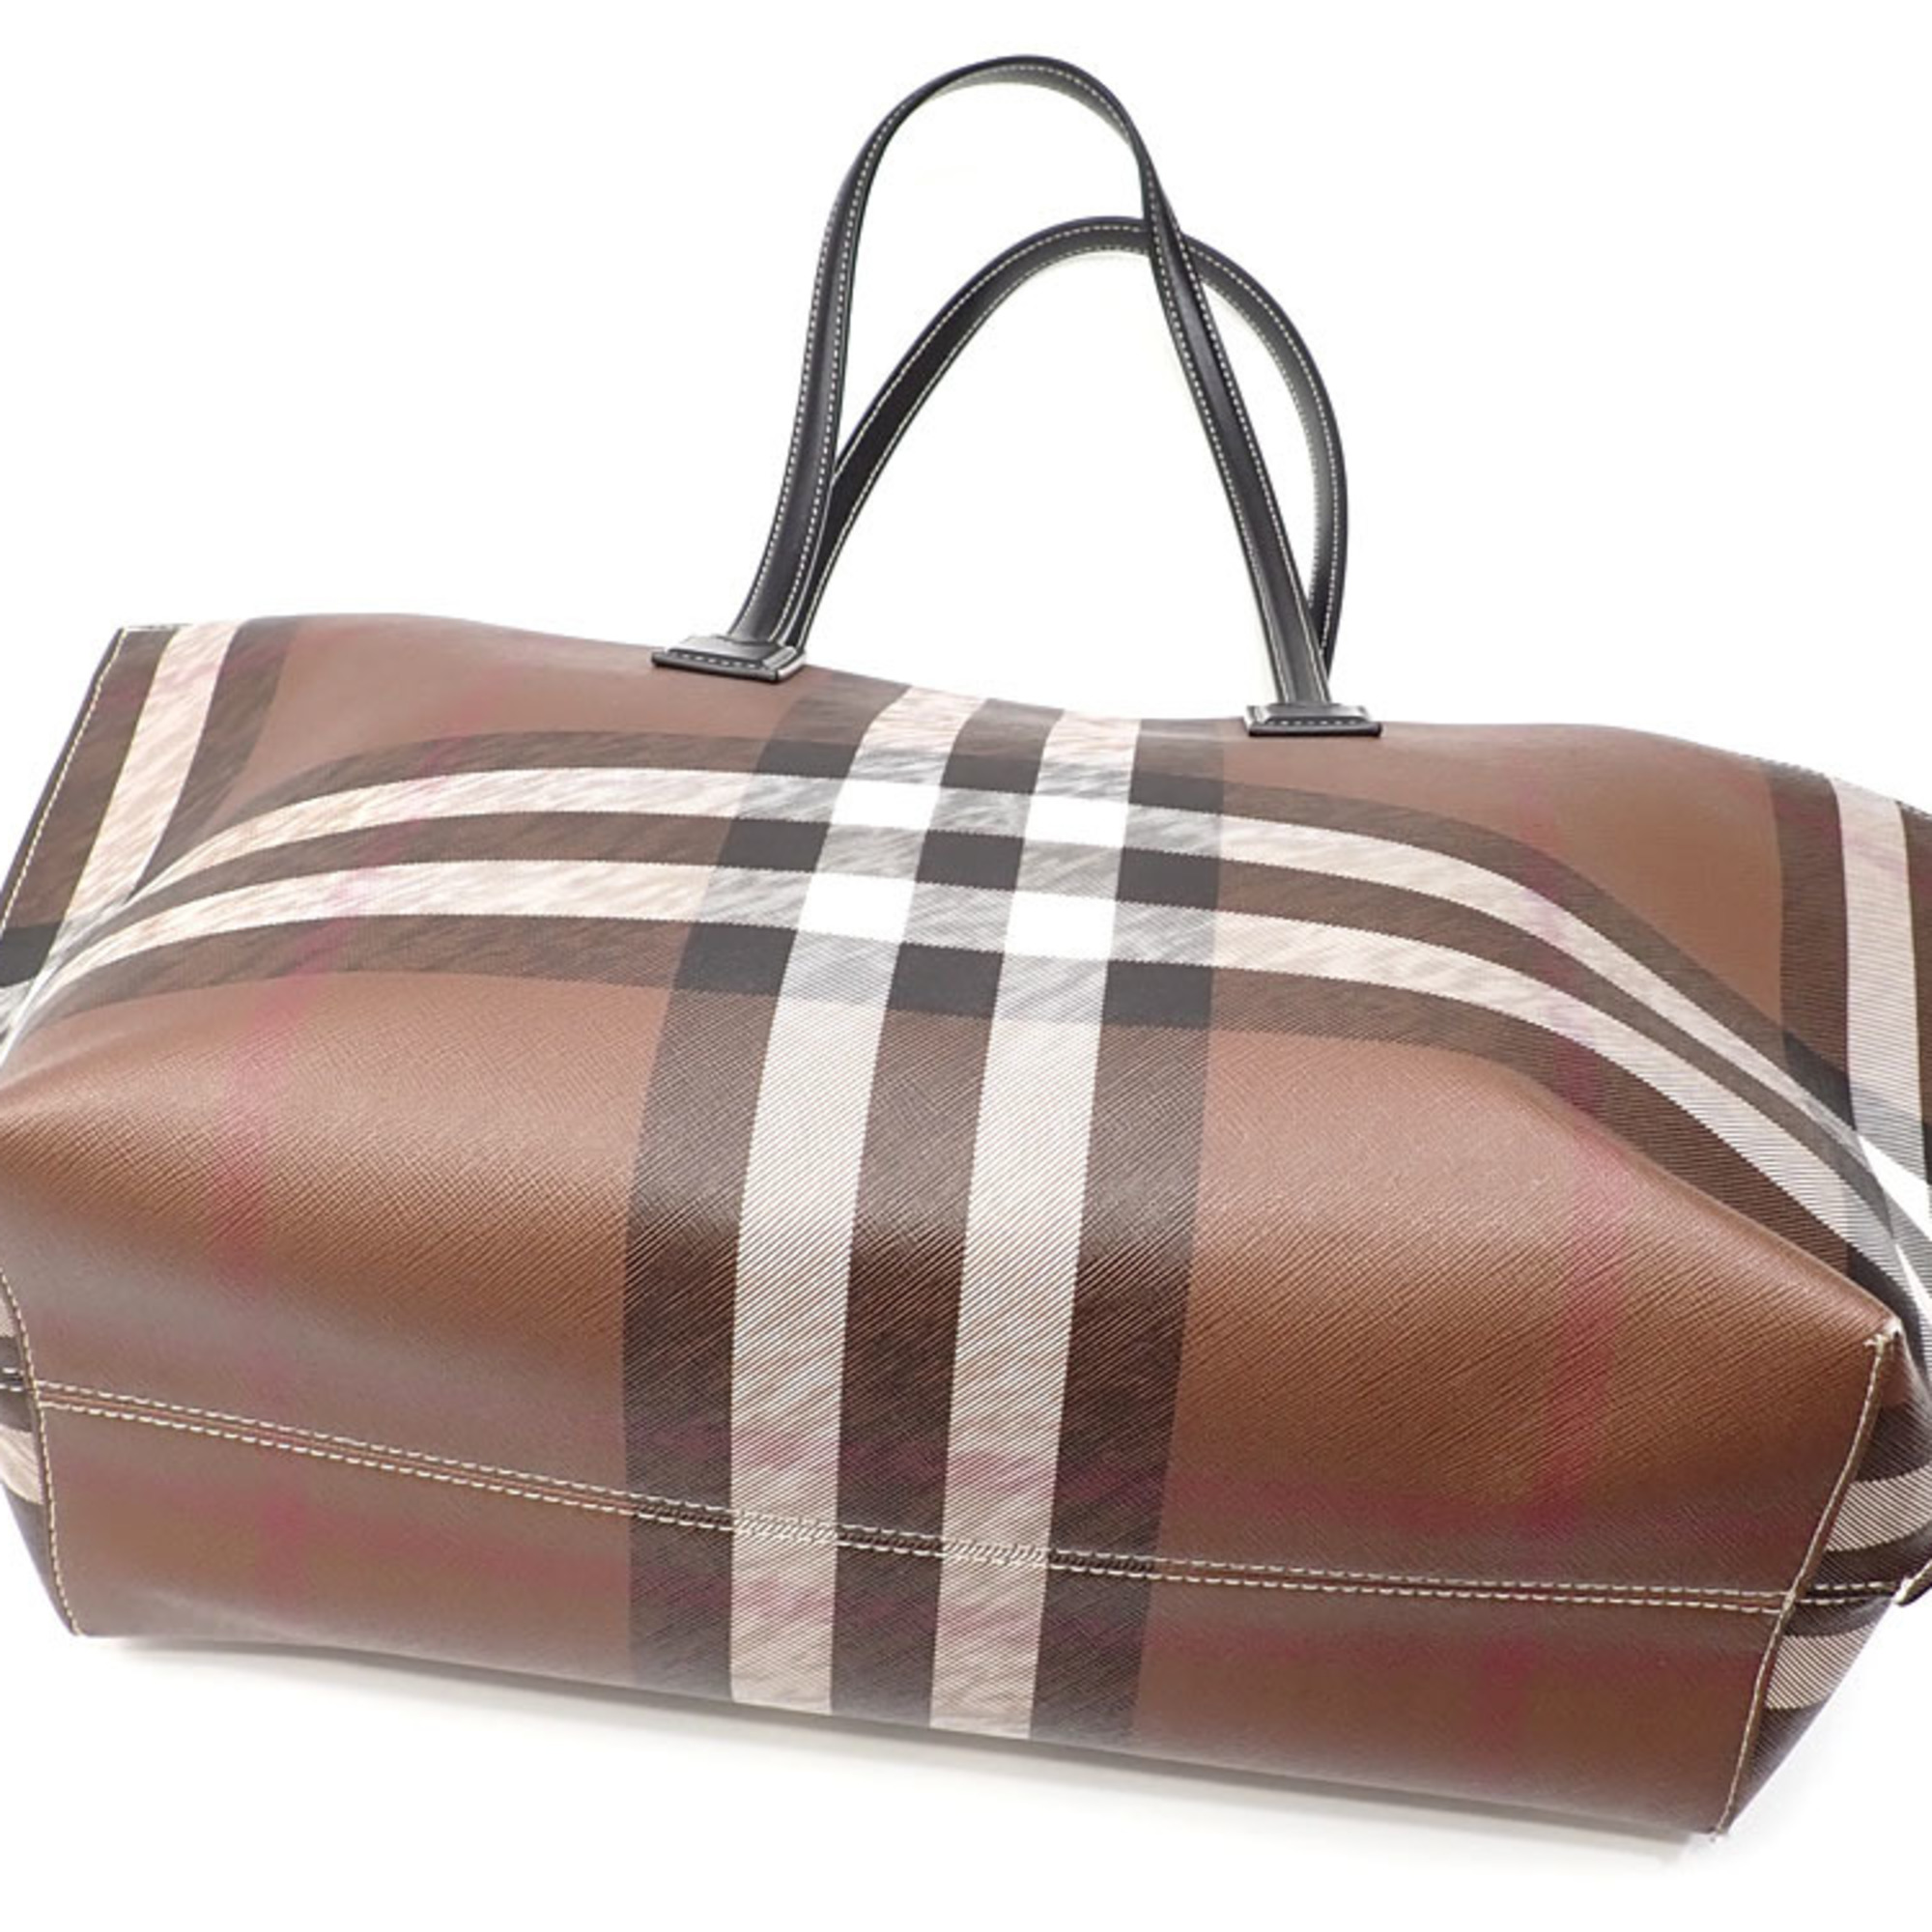 Burberry Tote Bag Medium Check Women's Dark Birch Brown PVC Leather 80696591 Shoulder Pattern